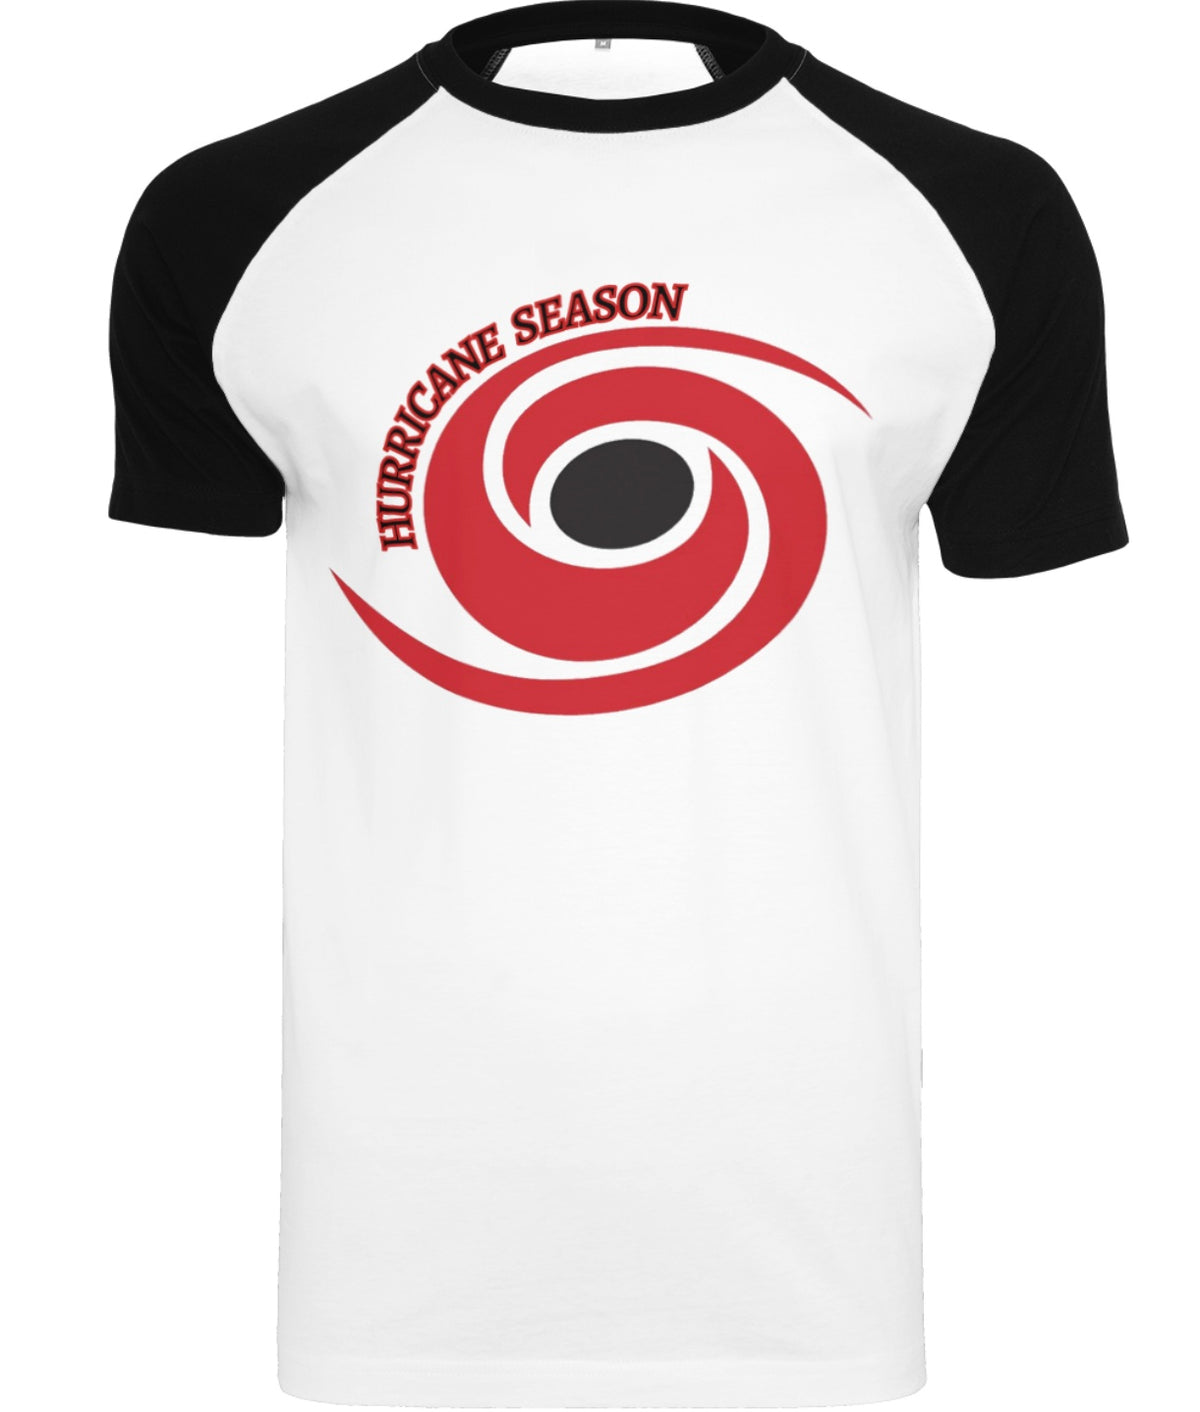 Hurricane Season T-Shirt